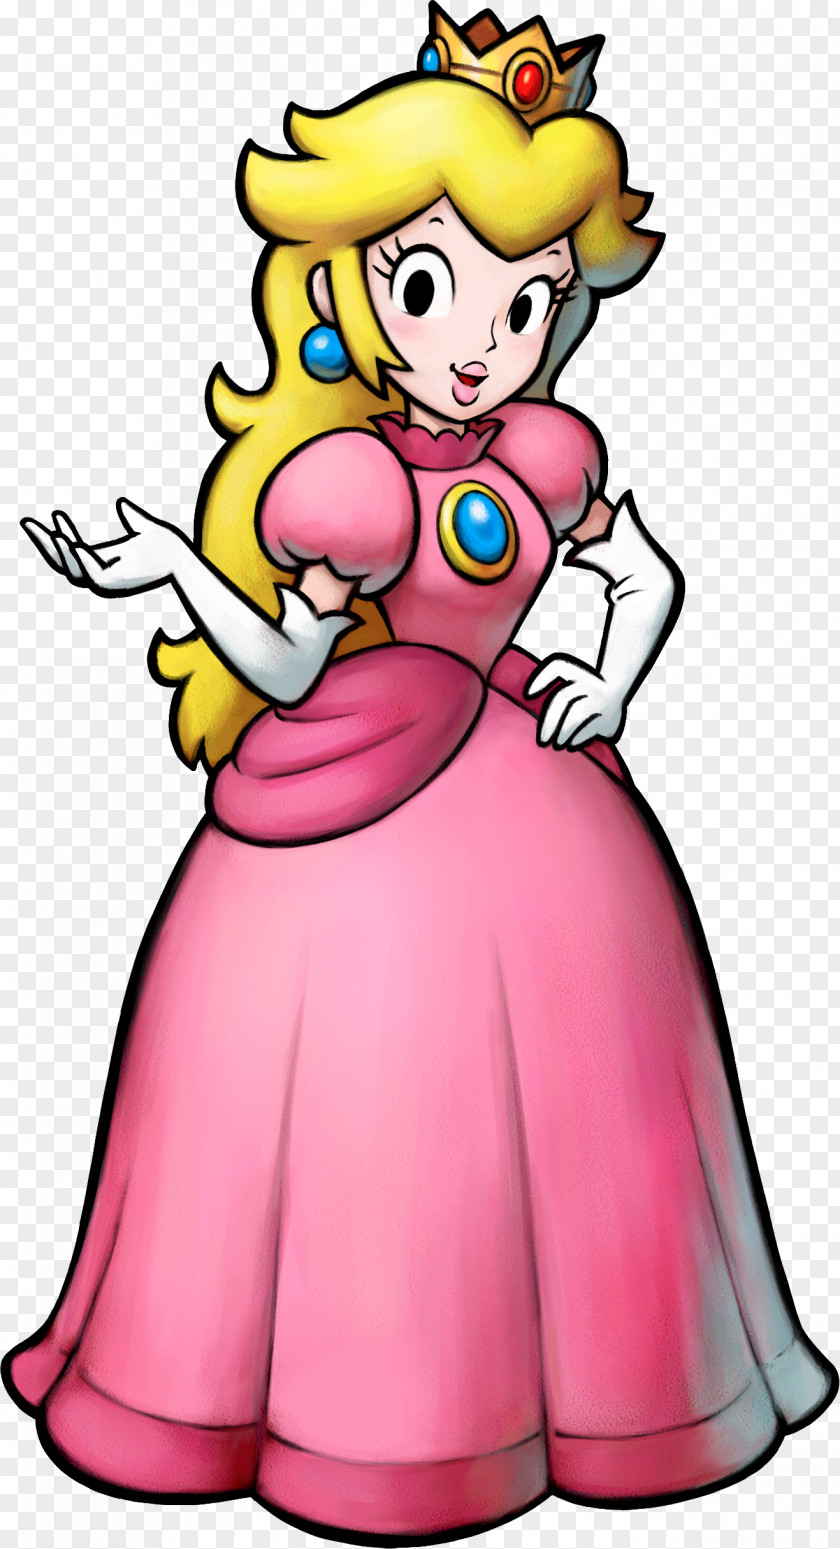 Mario Bros Super Princess Peach & Luigi: Partners In Time Bros. PNG